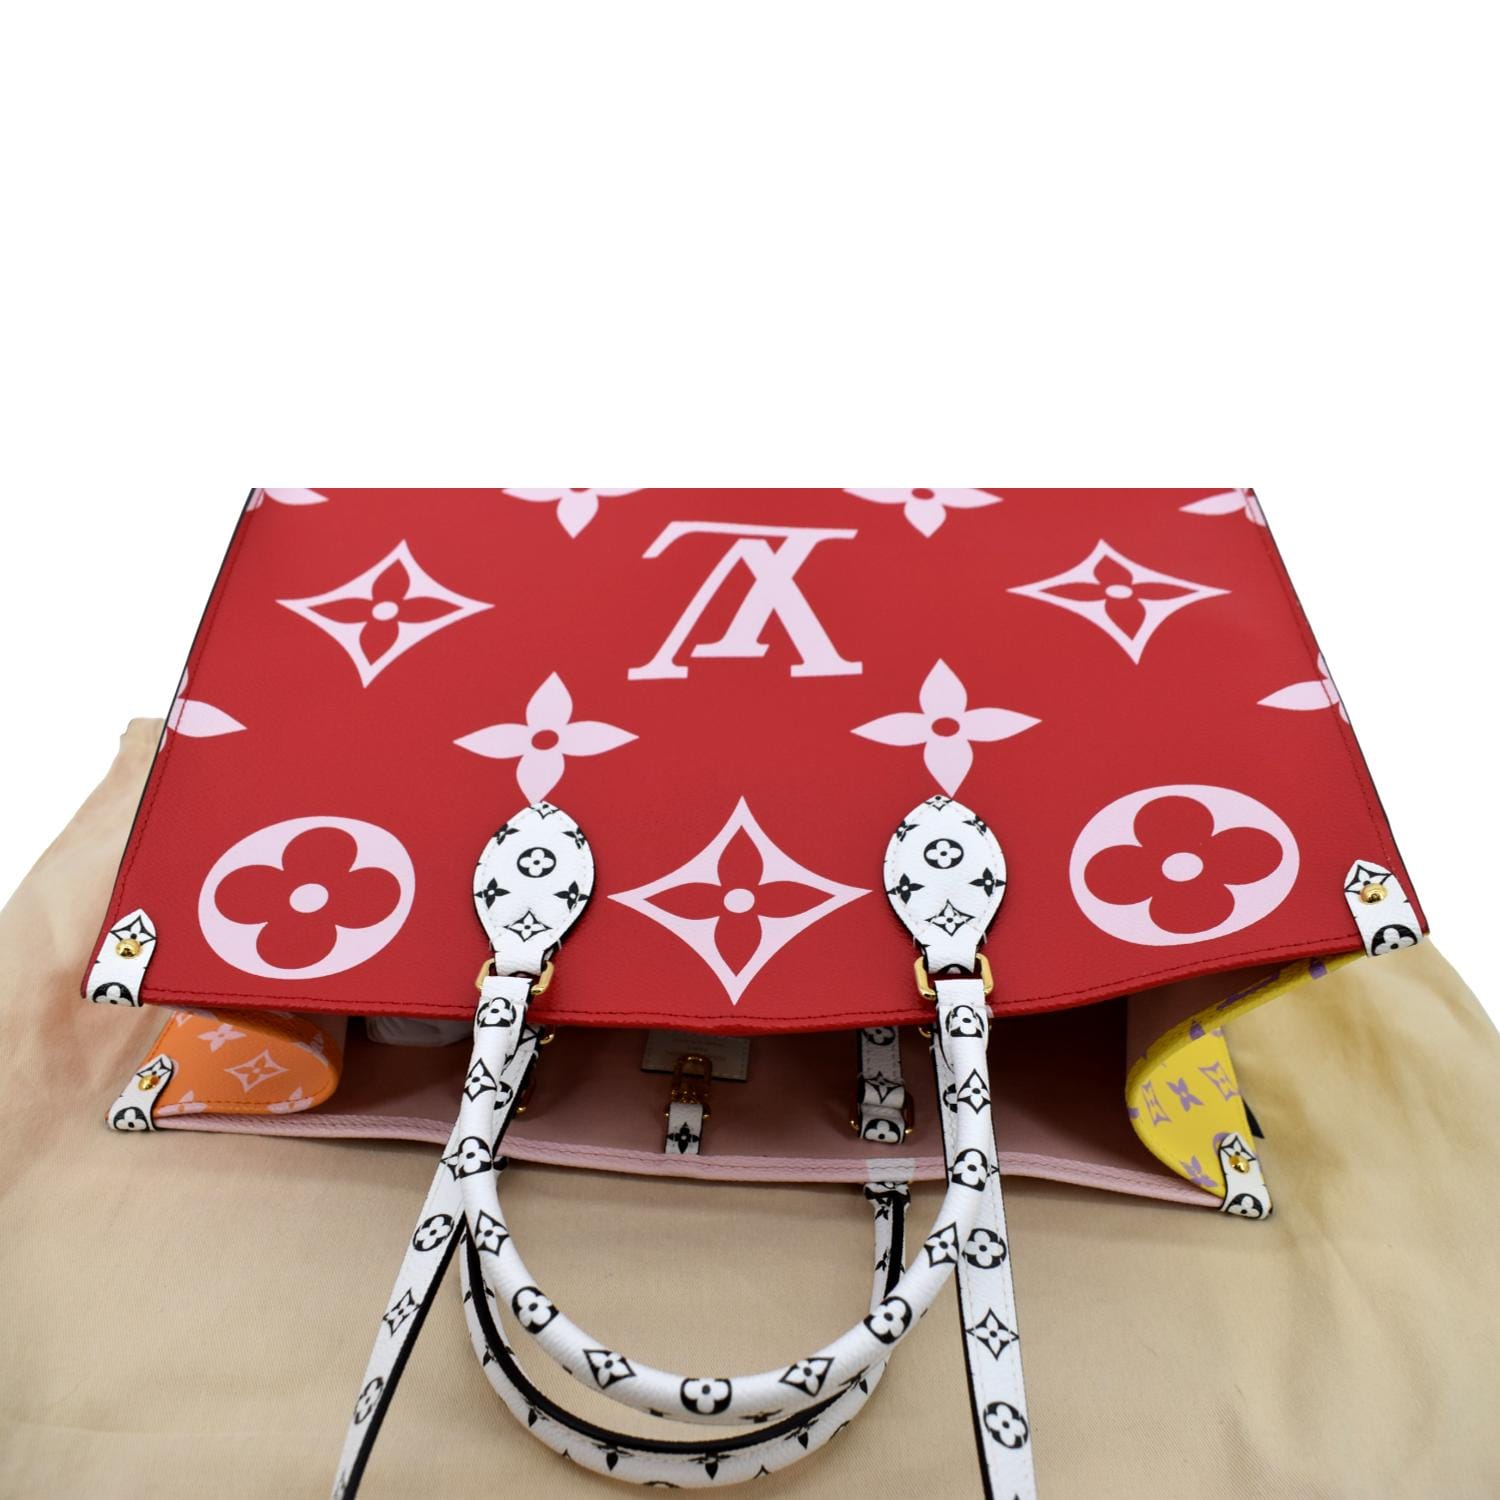 Louis Vuitton Bag Onthego Giant Monogram Red Tie Dye Rouge | 3D model